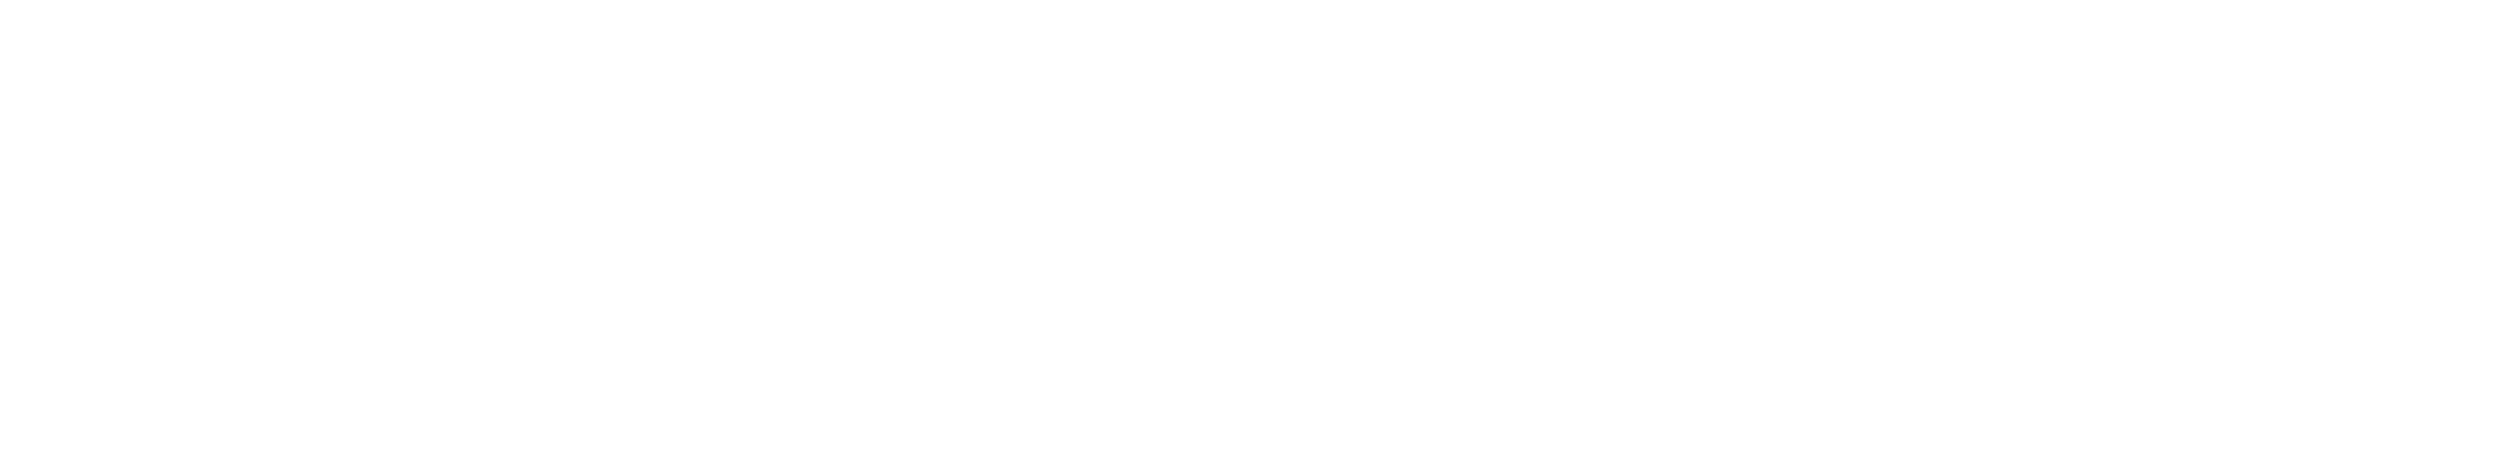 Anywhere Insurance Agency